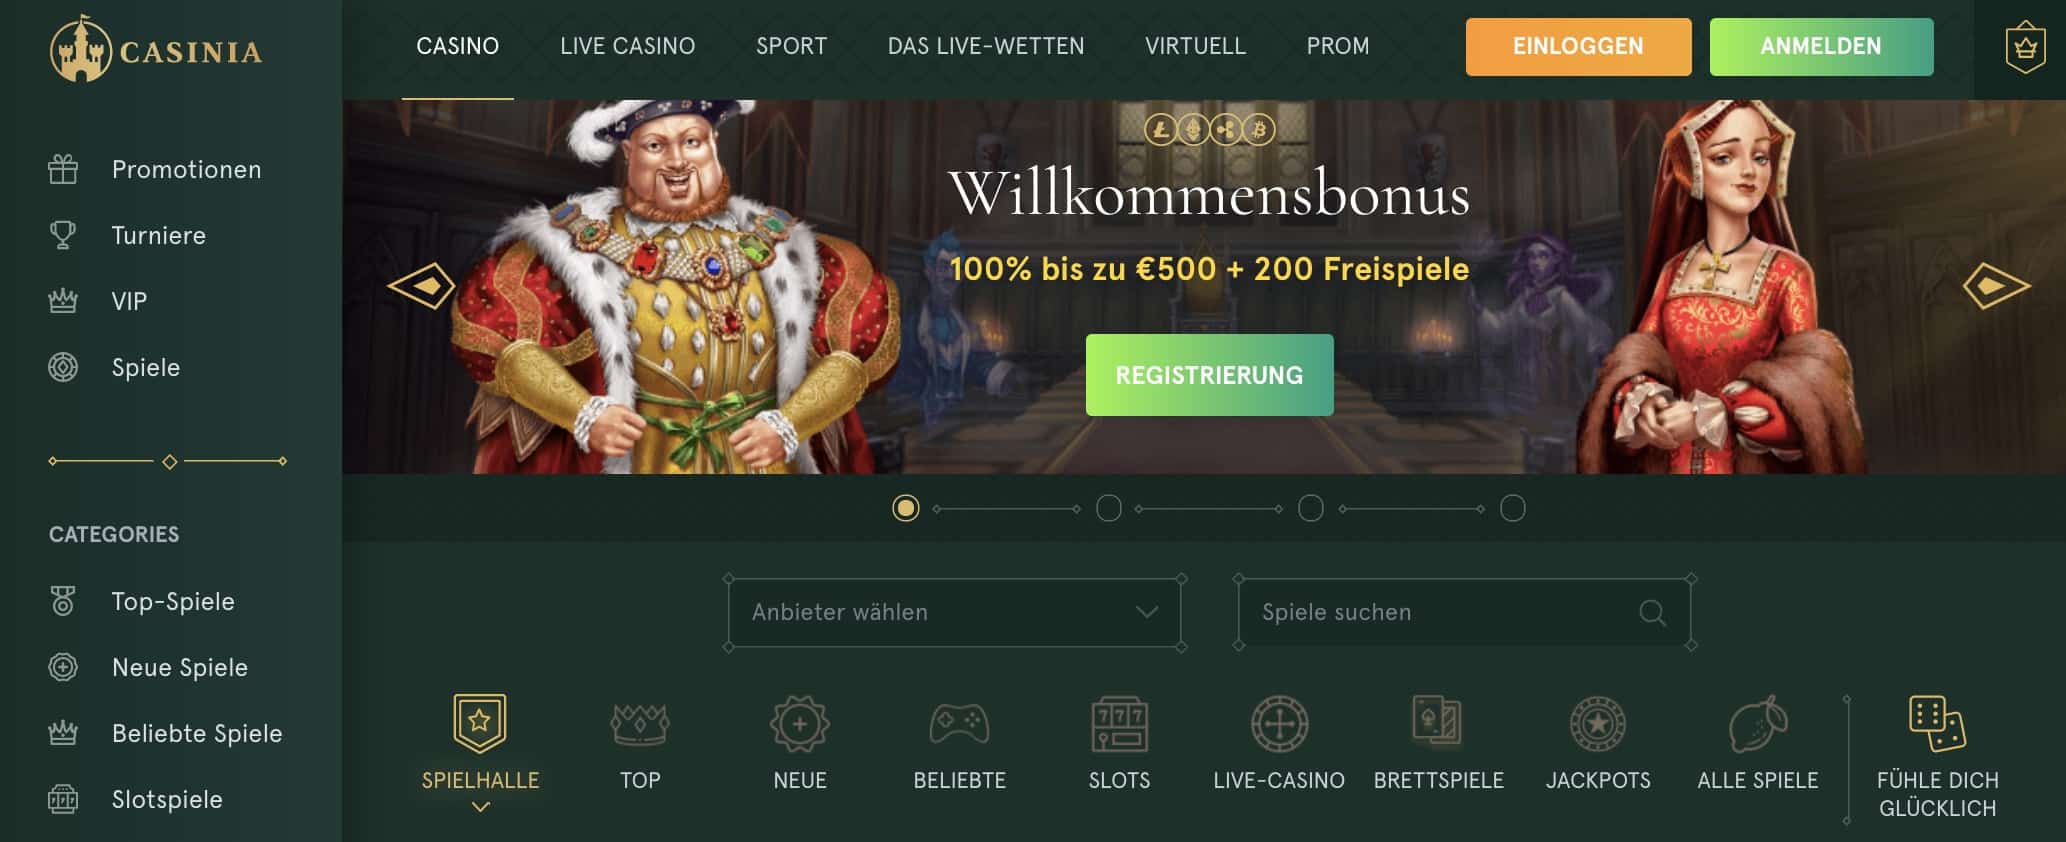 casiniaOnline casino homepage